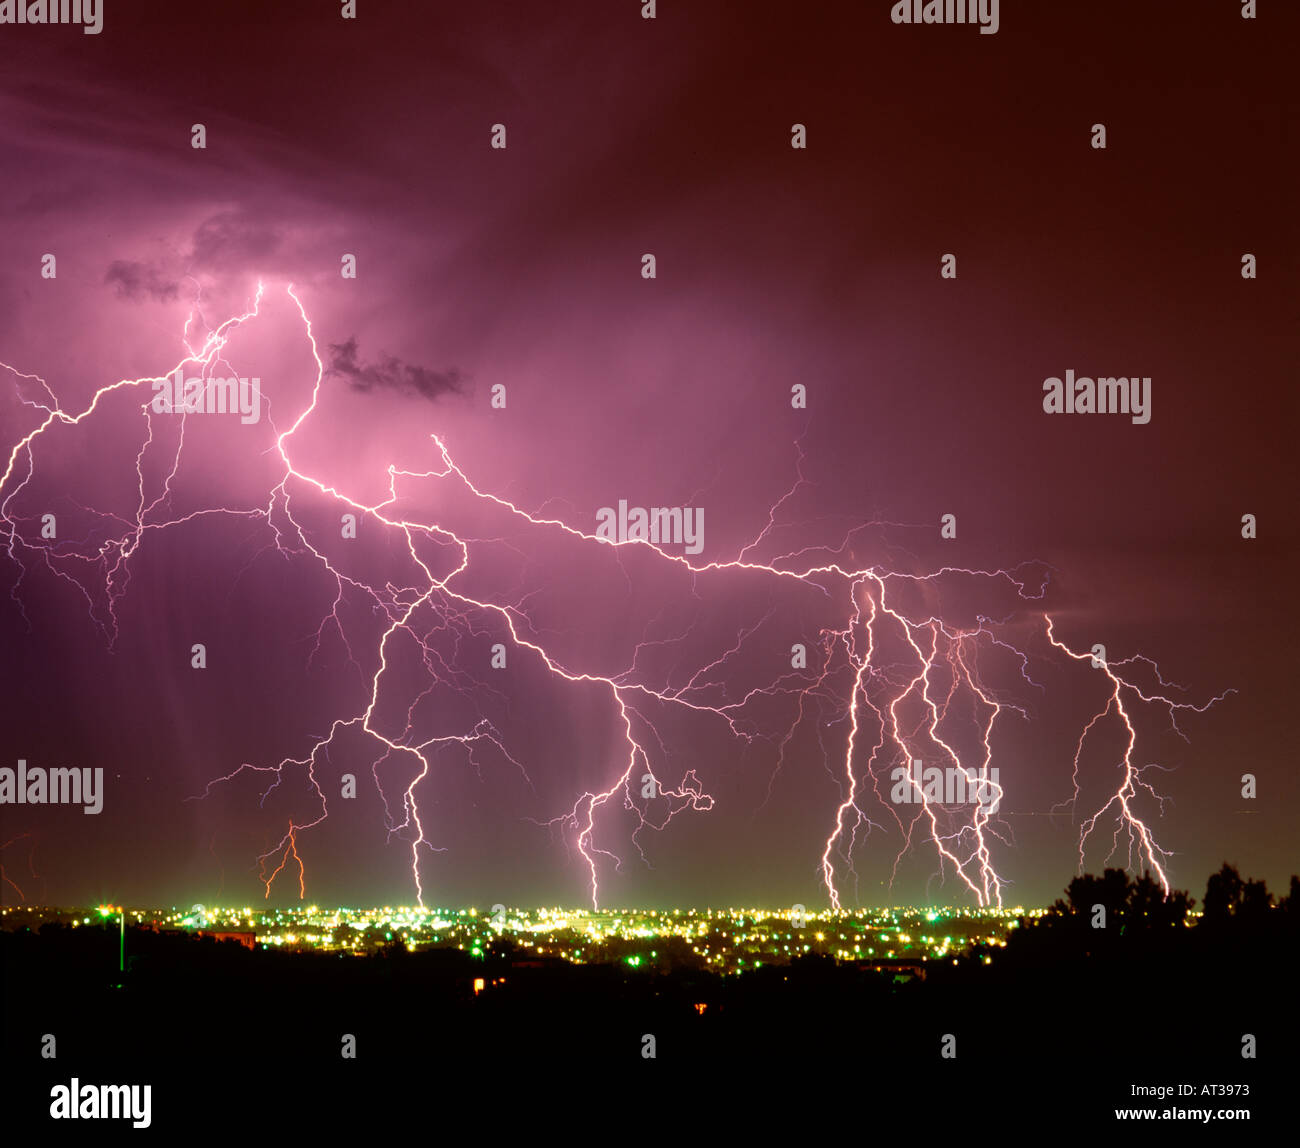 Many lightning bolts shoot across the night sky over a city Stock Photo